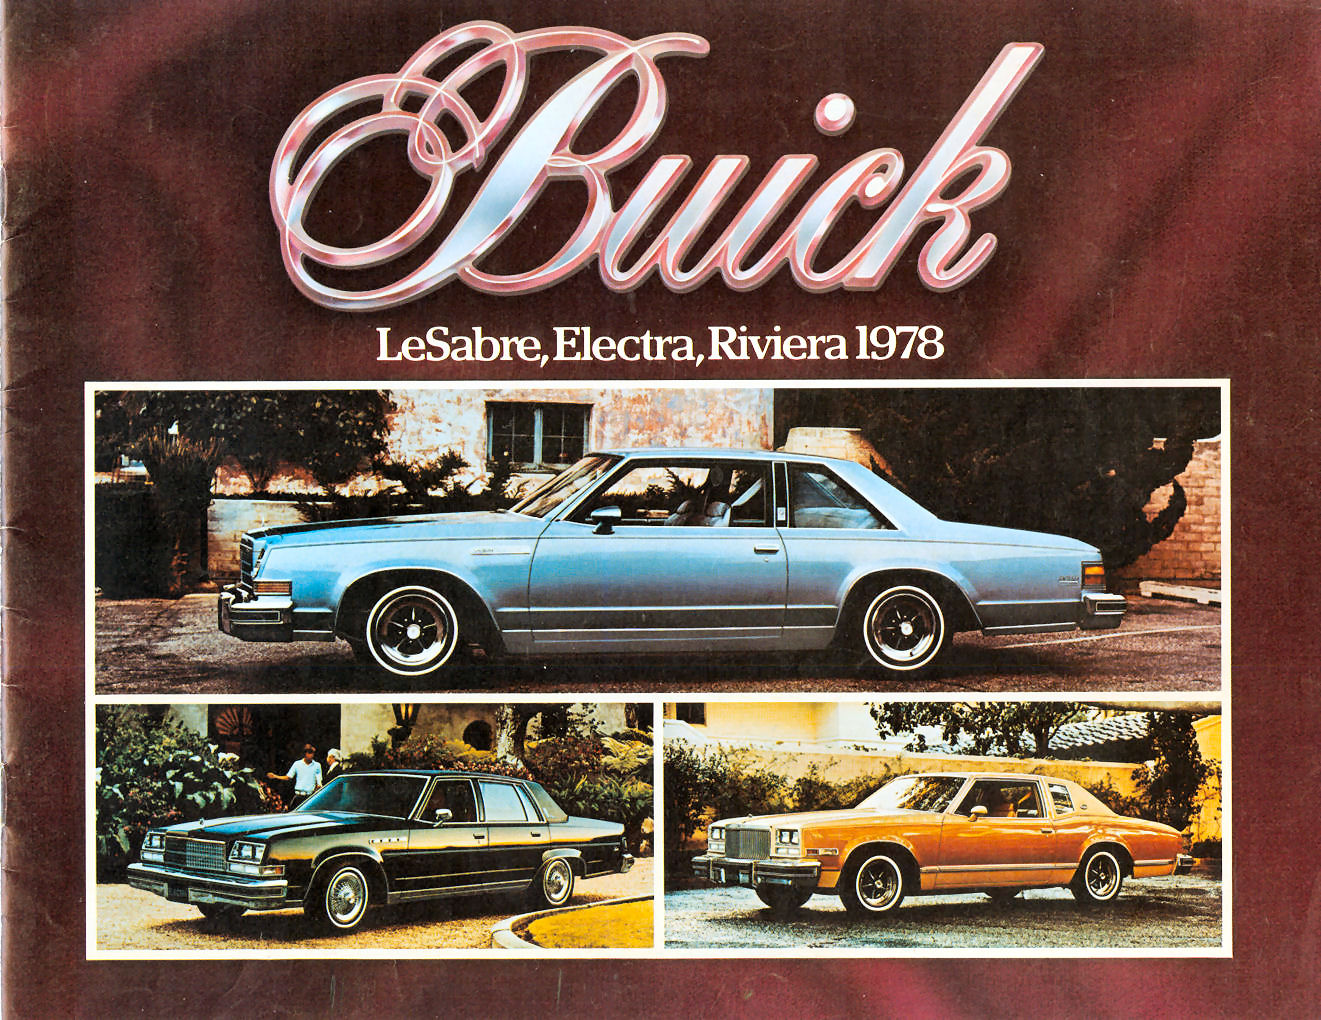 1978_Buick_Full_Size_Cdn-01